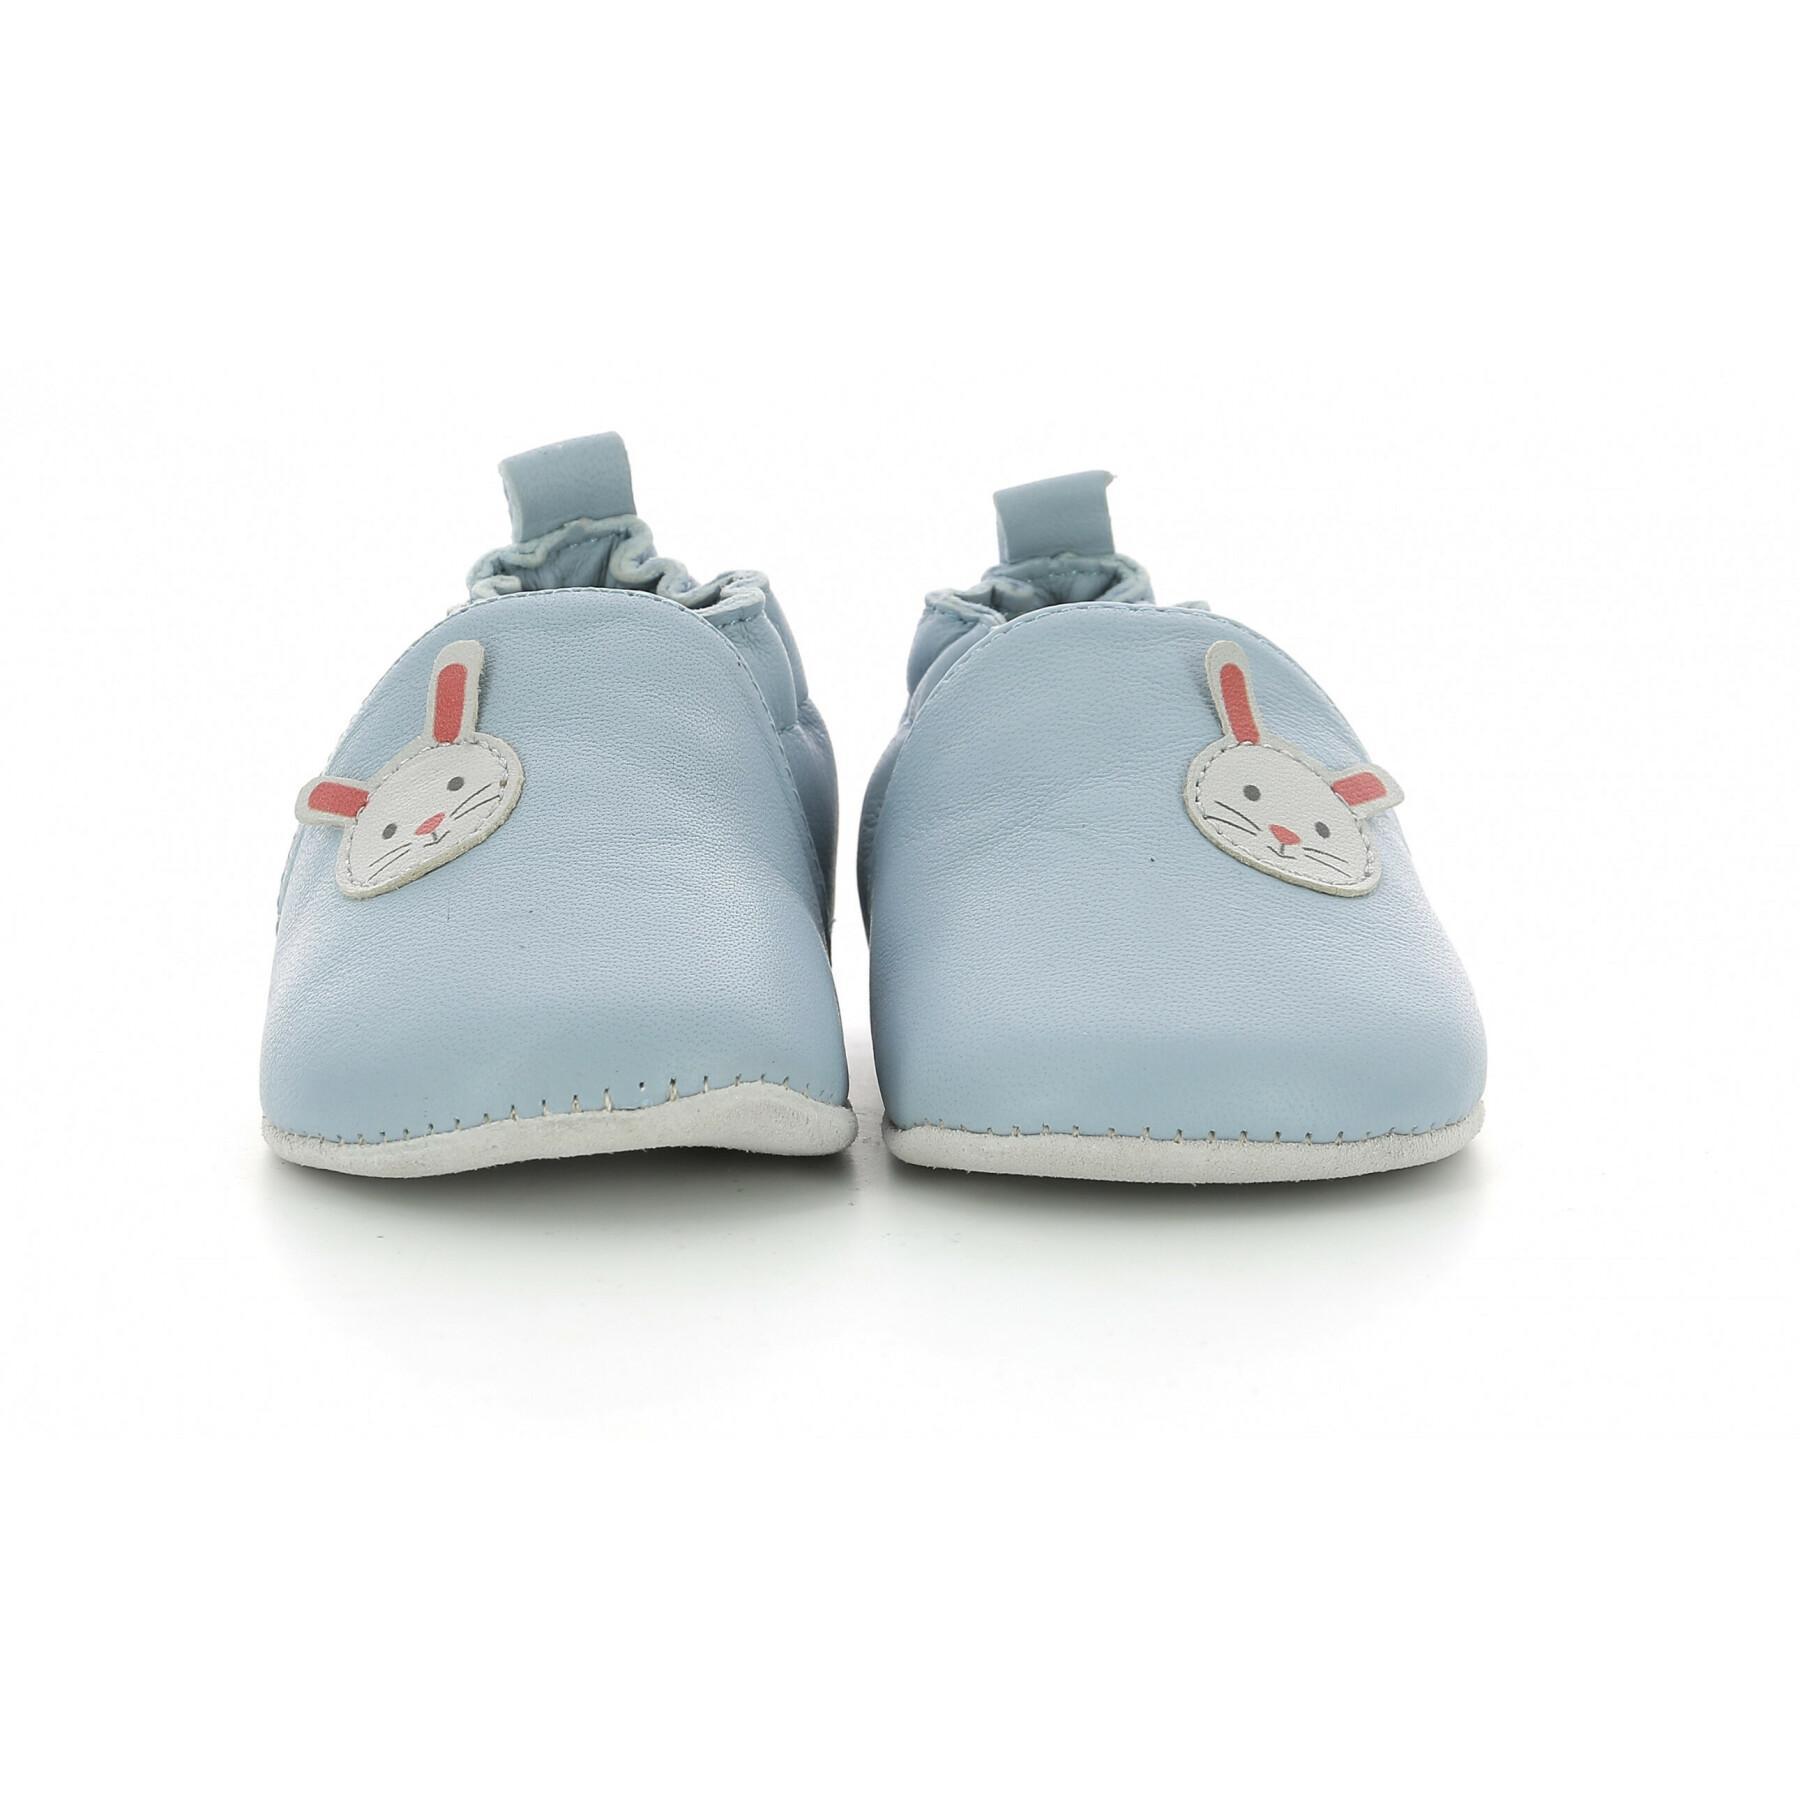 Sapatos de bebê Robeez Mimirabbit